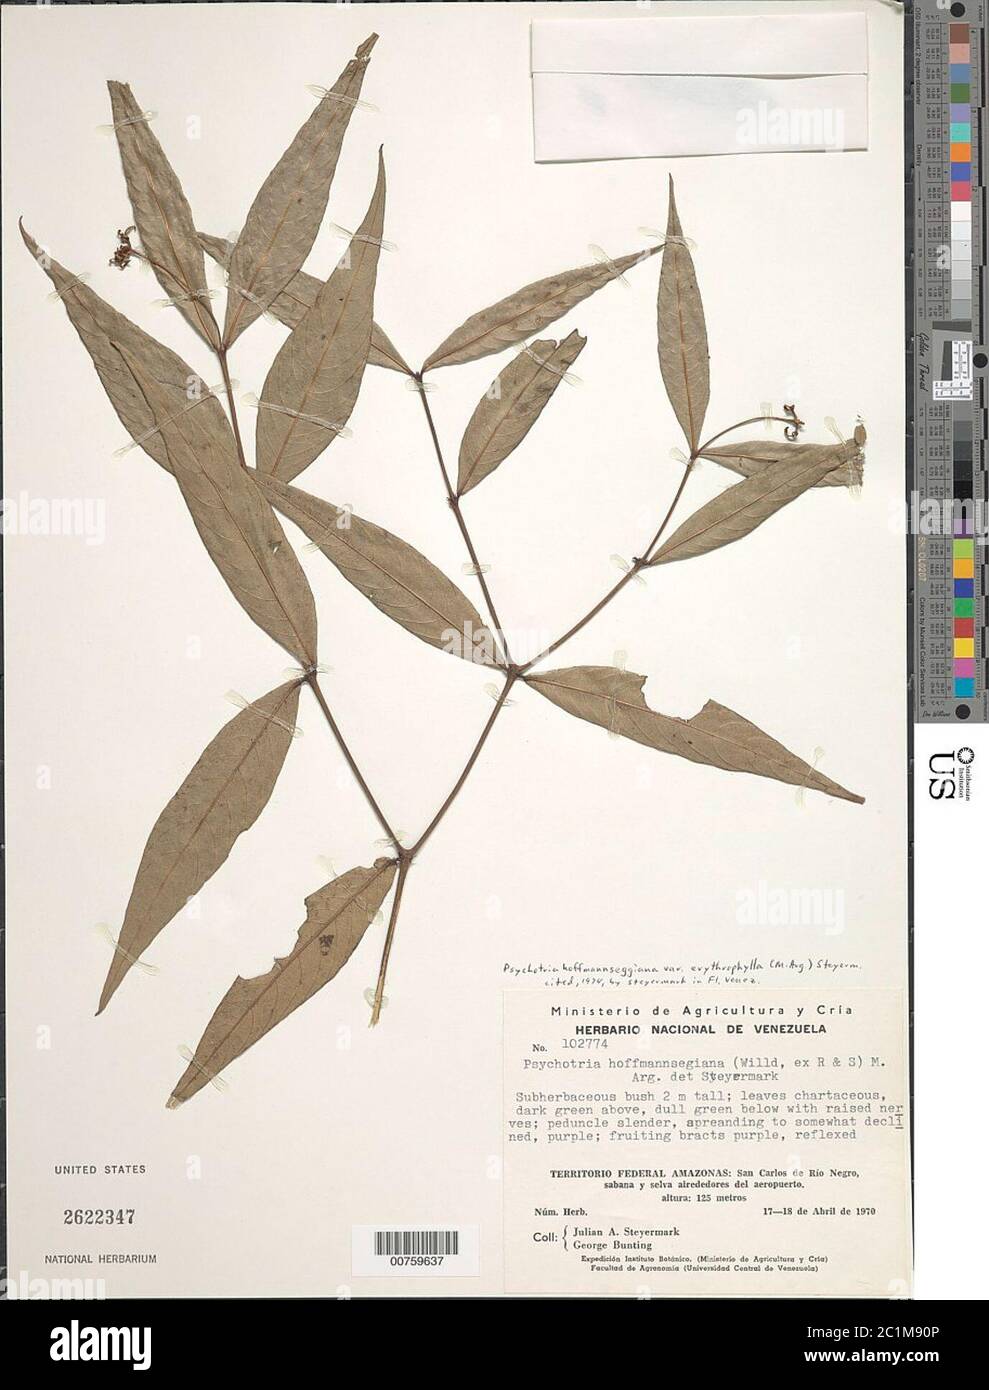 Psychotria hoffmannseggiana var erythrophylla Mll Arg Steyerm Psychotria hoffmannseggiana var erythrophylla Mll Arg Steyerm. Stock Photo